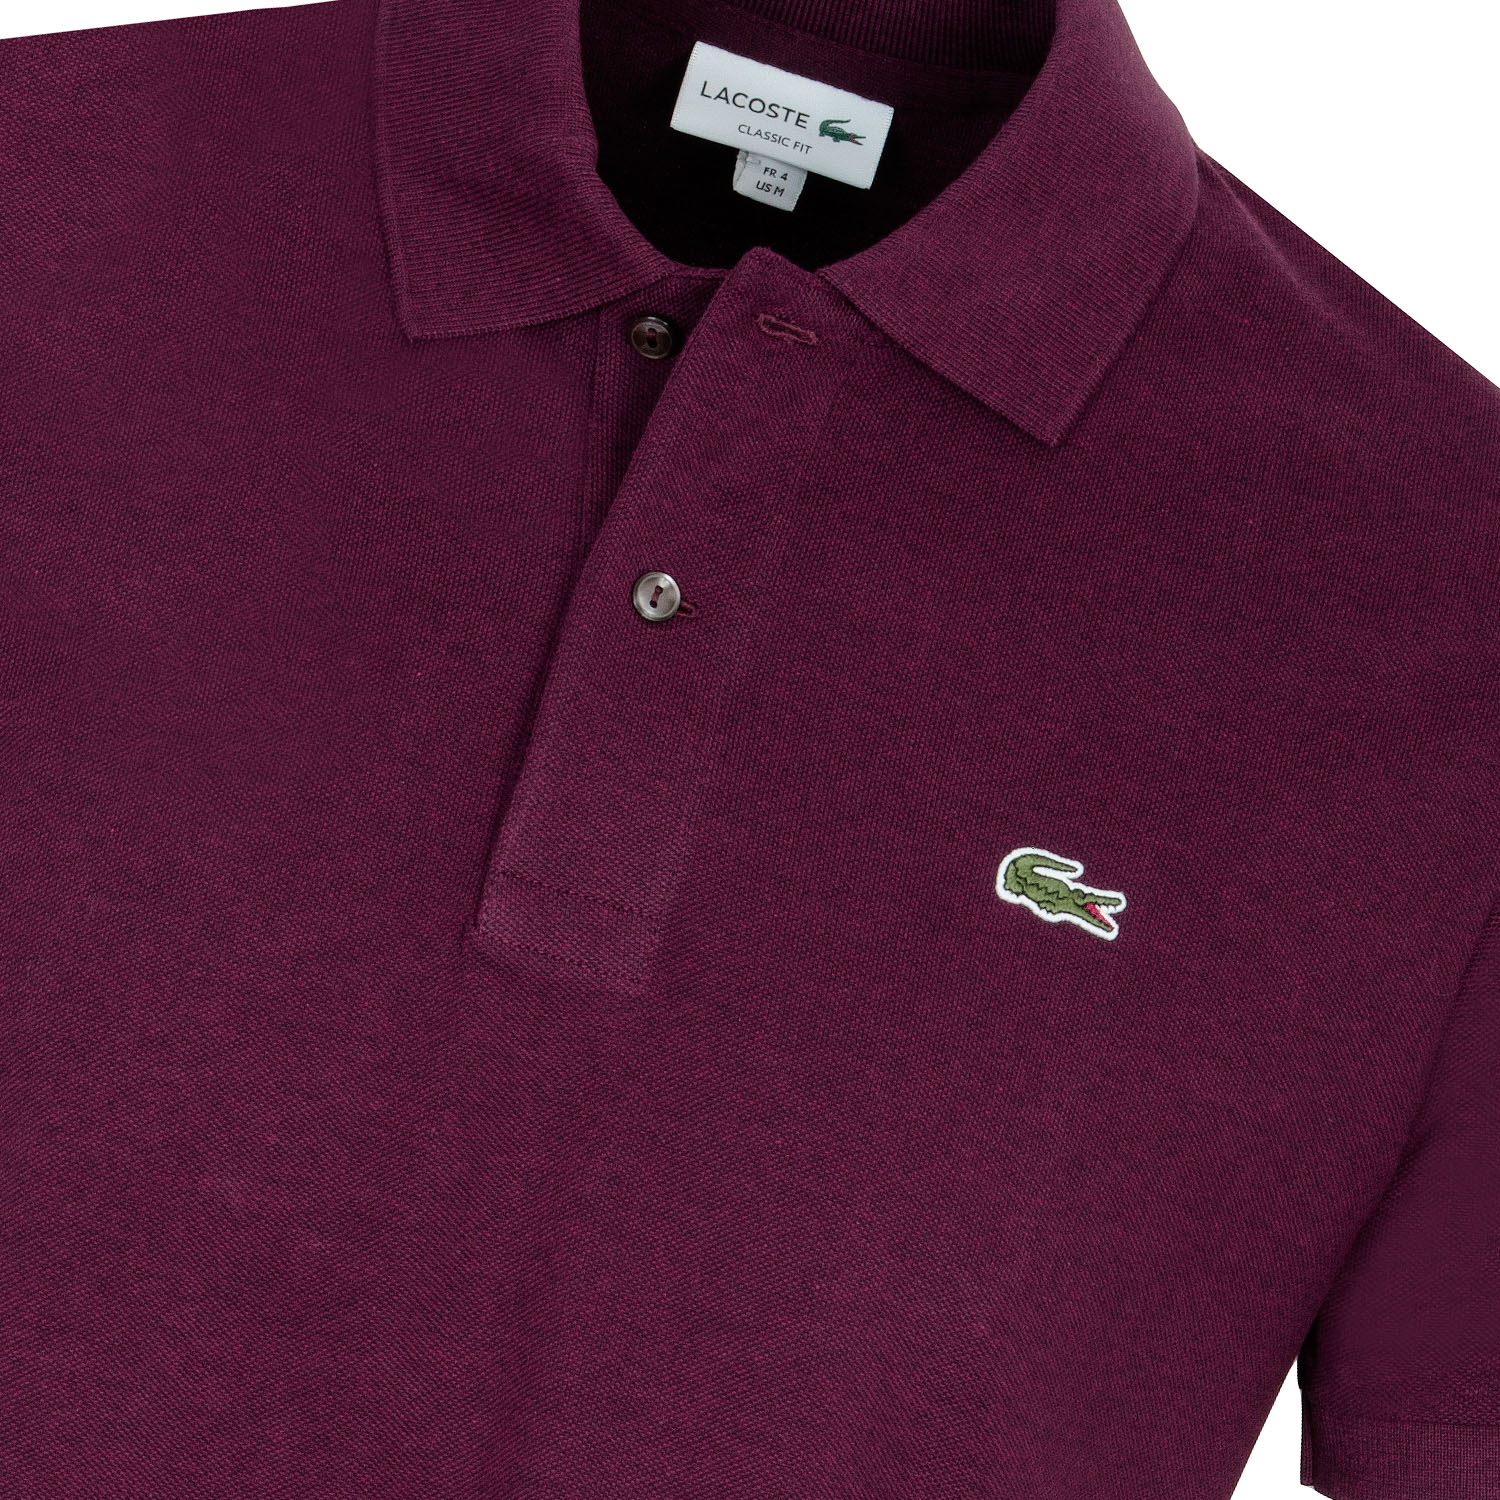 Lacoste Marl Classic Golf Polo Shirt Vine Chine | Scottsdale Golf